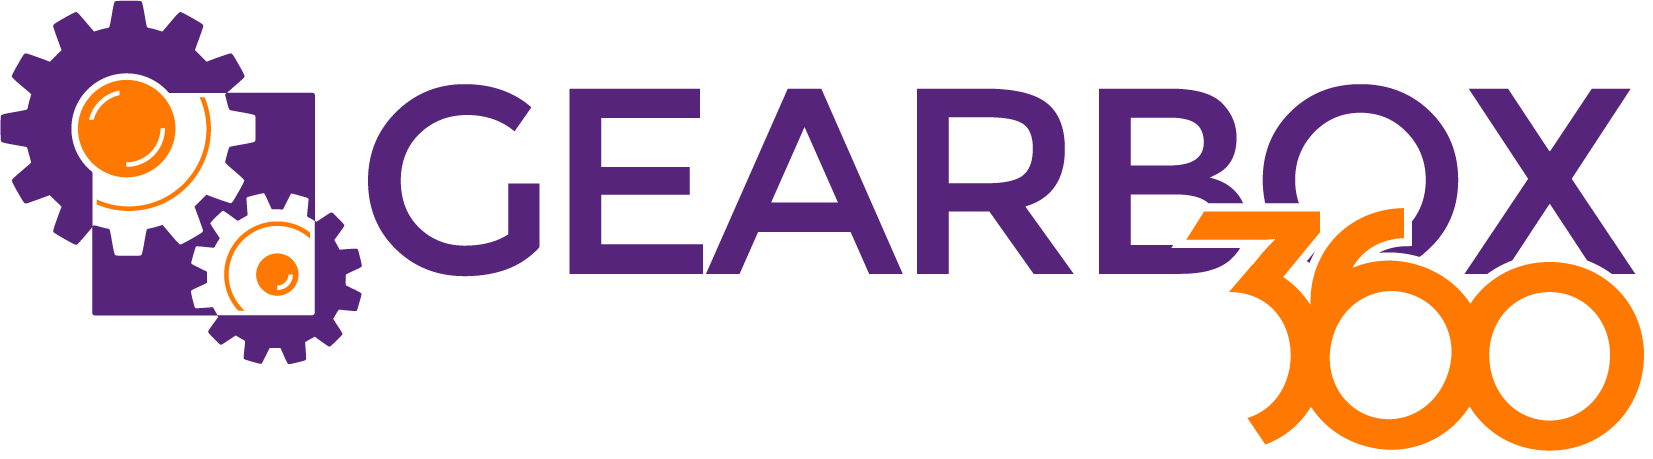 Gearbox360 LLC's Logo